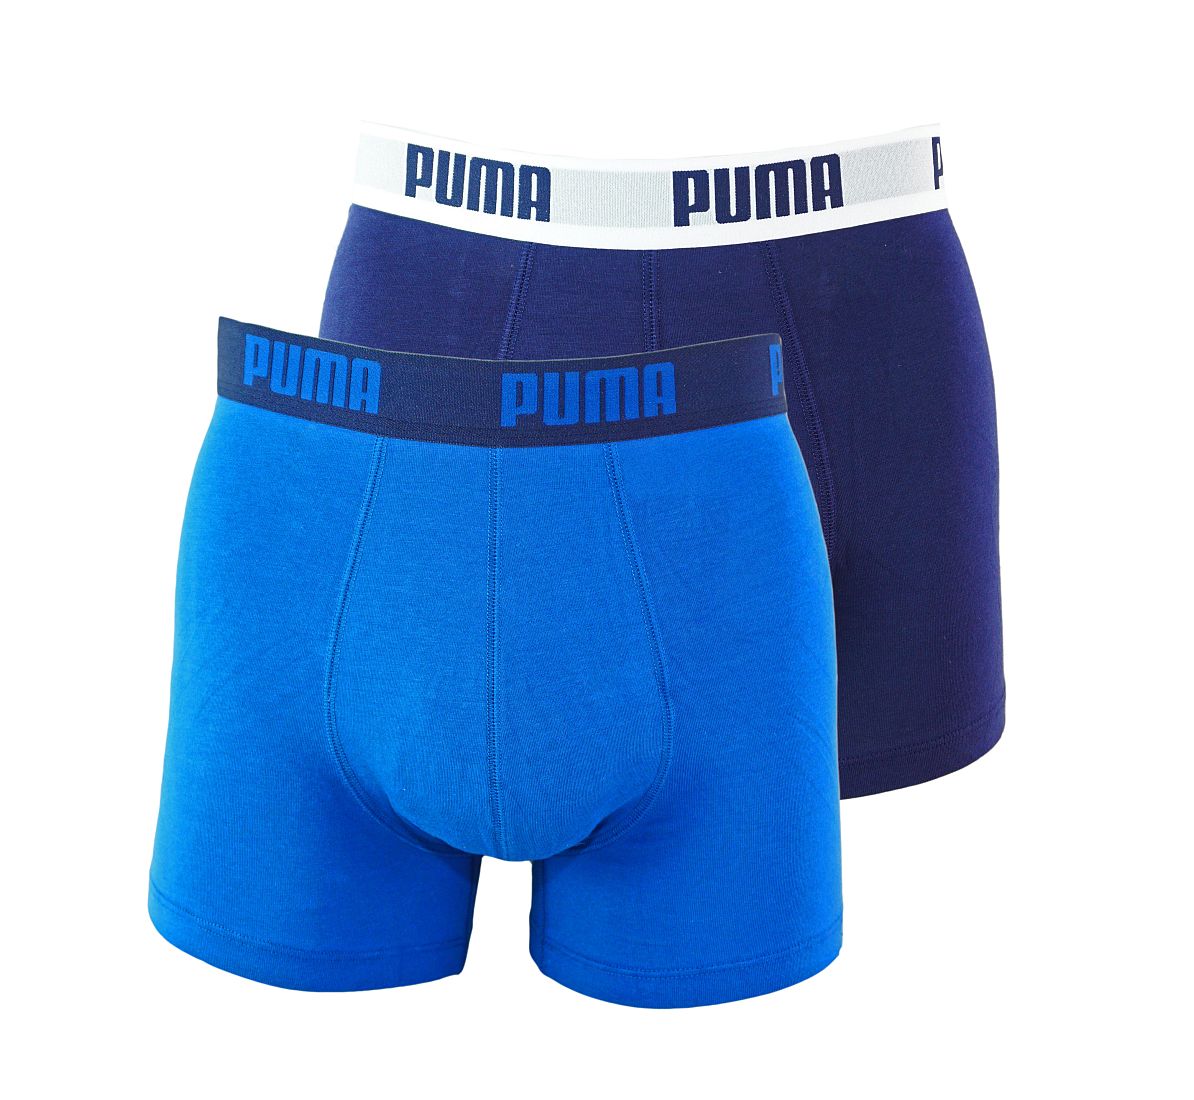 PUMA Shorts Unterhosen 2er Pack Boxer 521015001 420 020 true blue SF17-PMS1